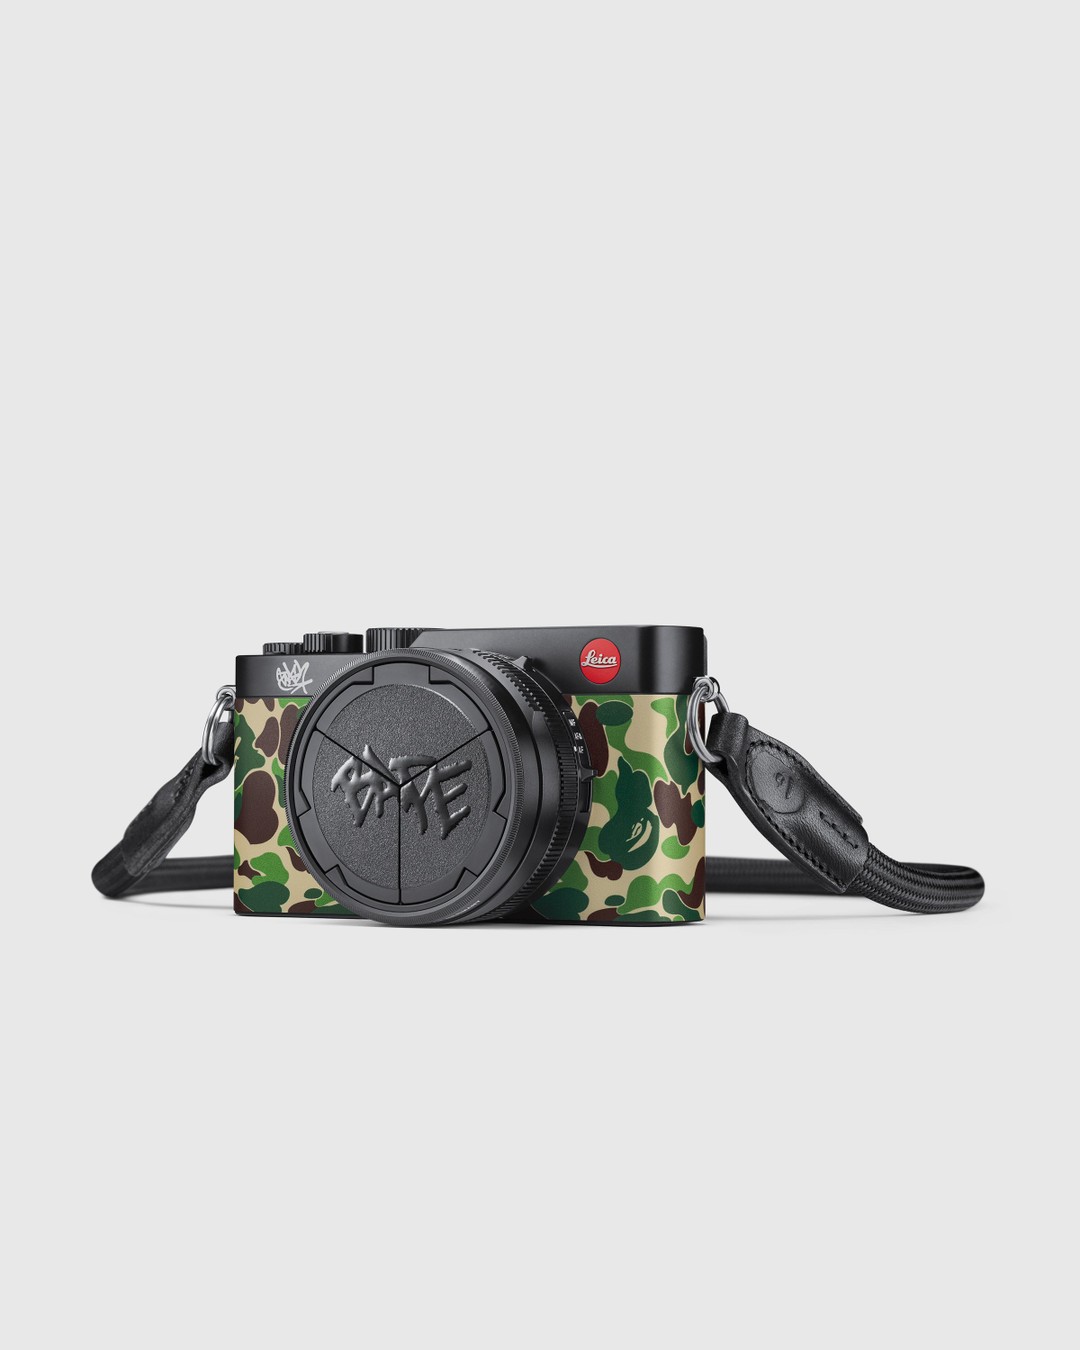 Leica – D-Lux 7 “A BATHING APE® x STASH” Edition Black - Lifestyle - Multi - Image 3